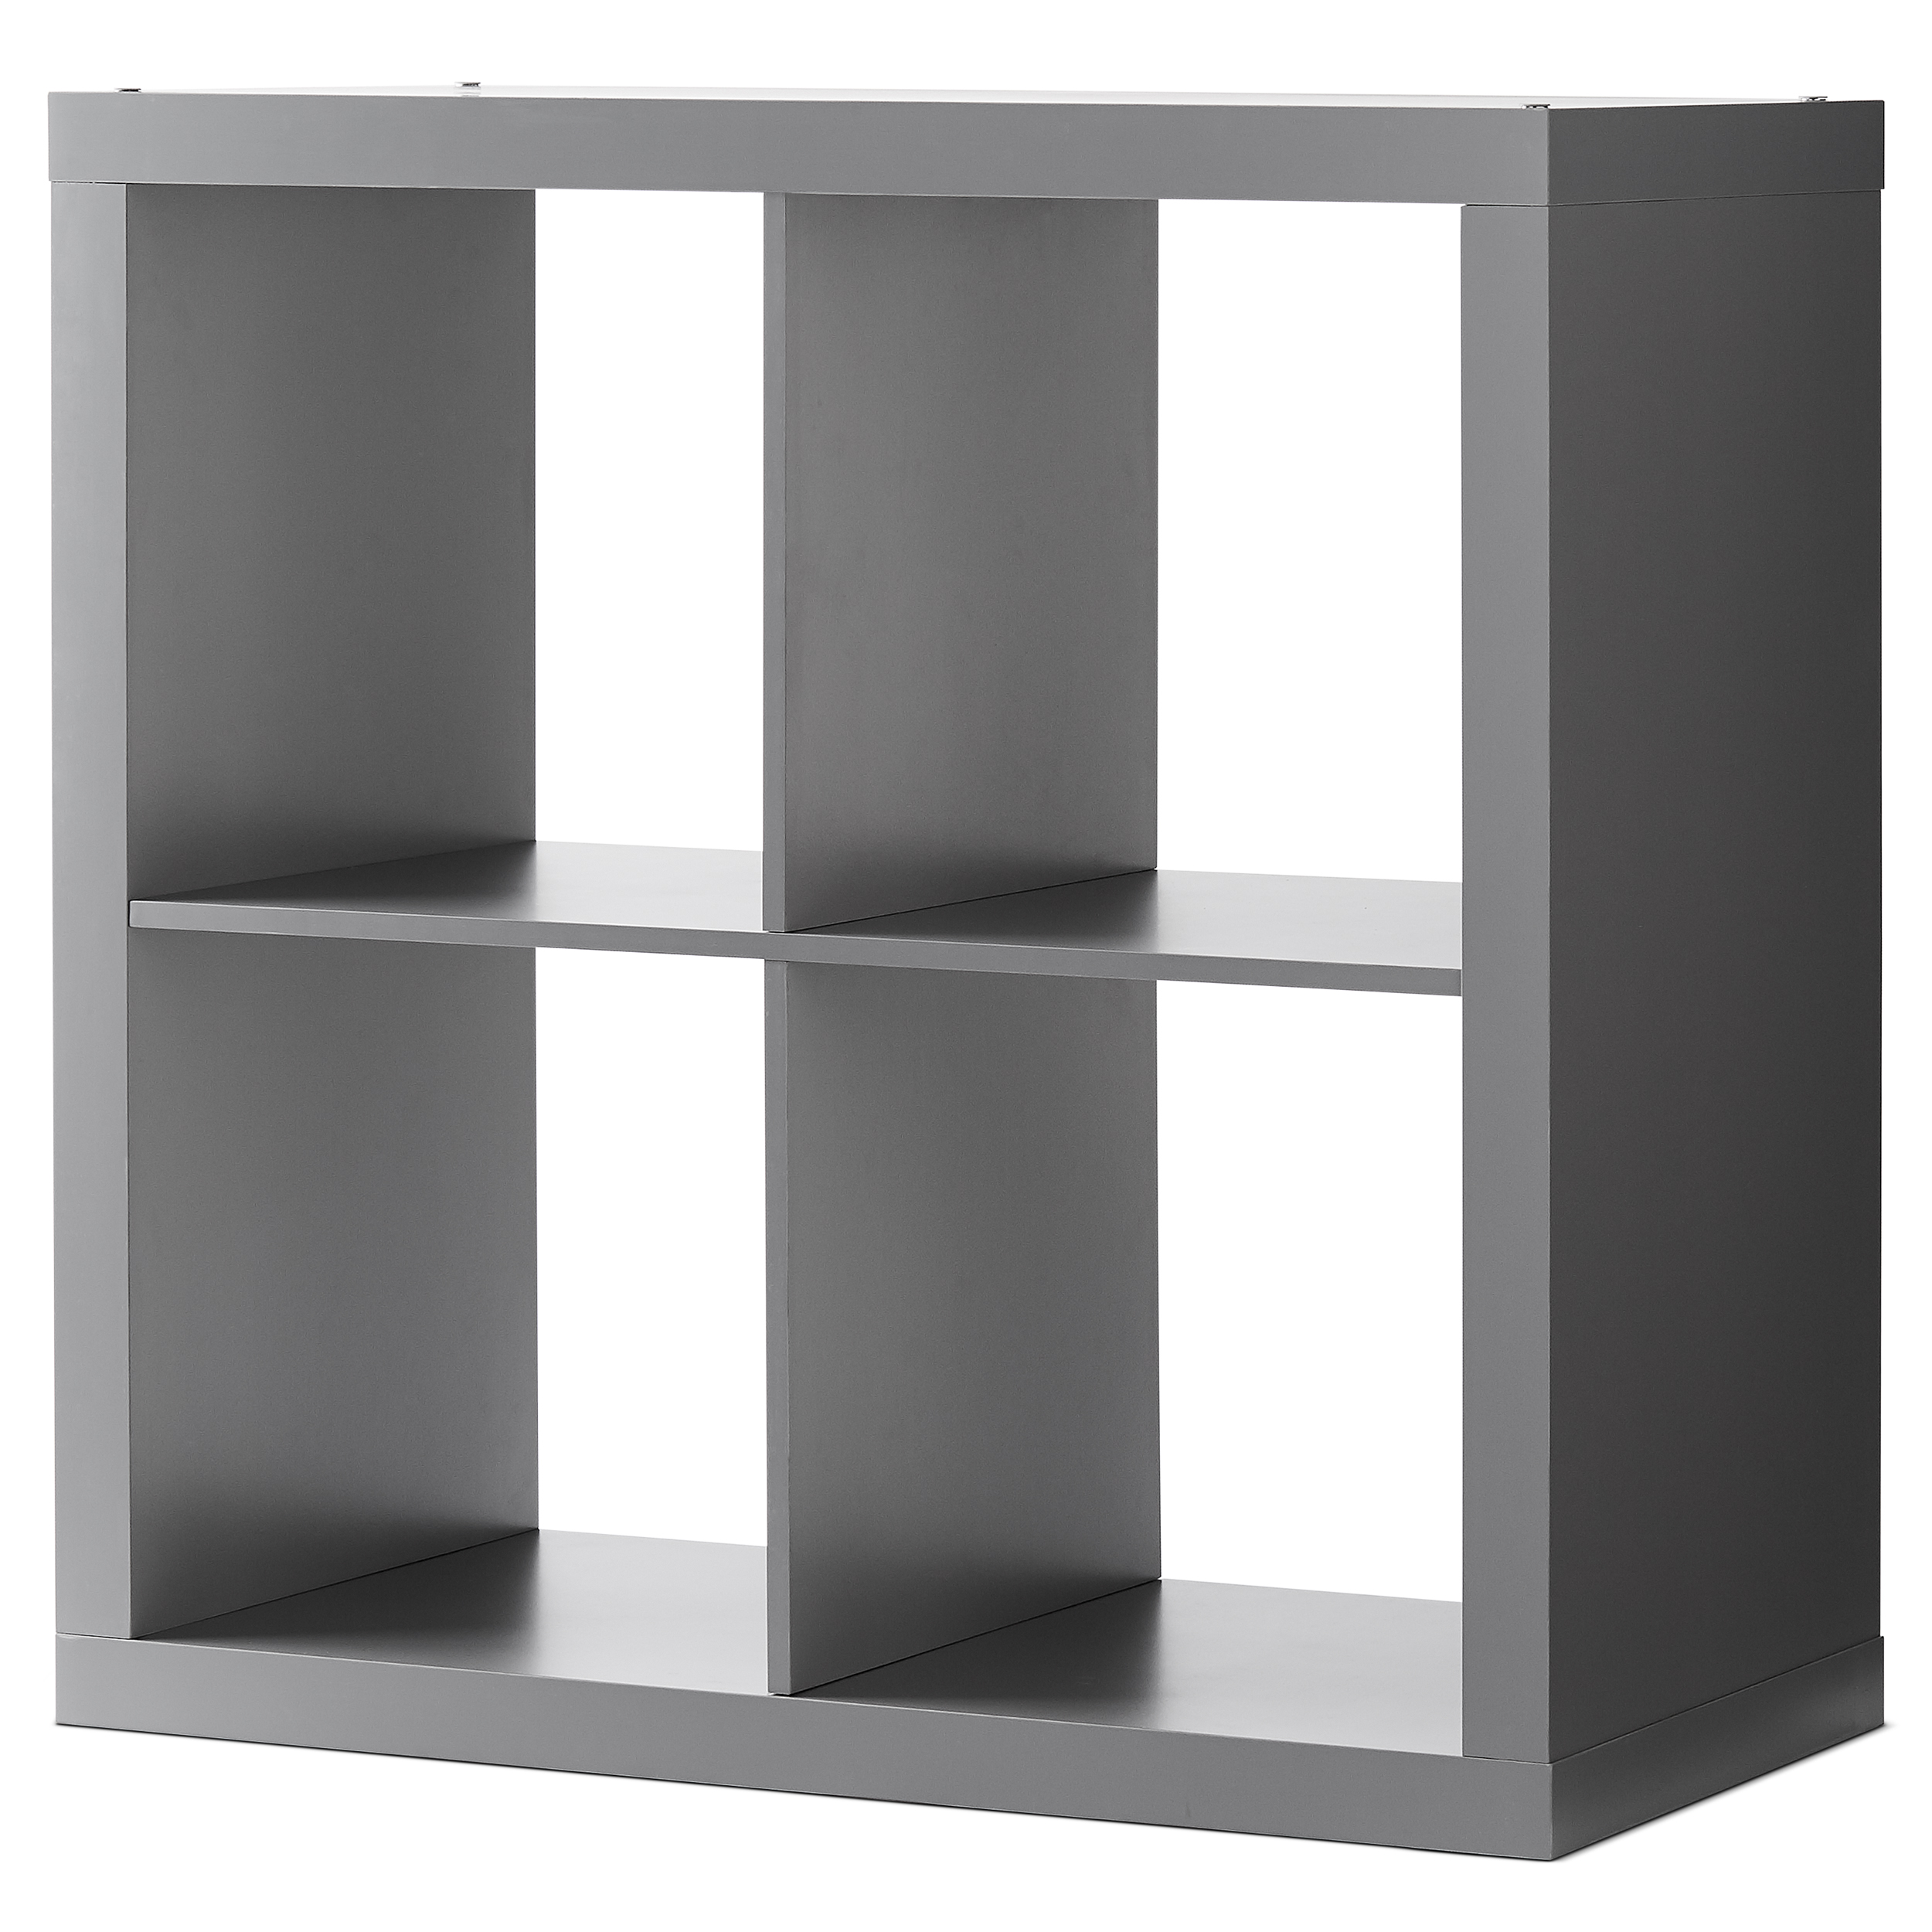 Better Homes & Gardens 4-Cube Storage Organizer, Gray - image 3 of 7